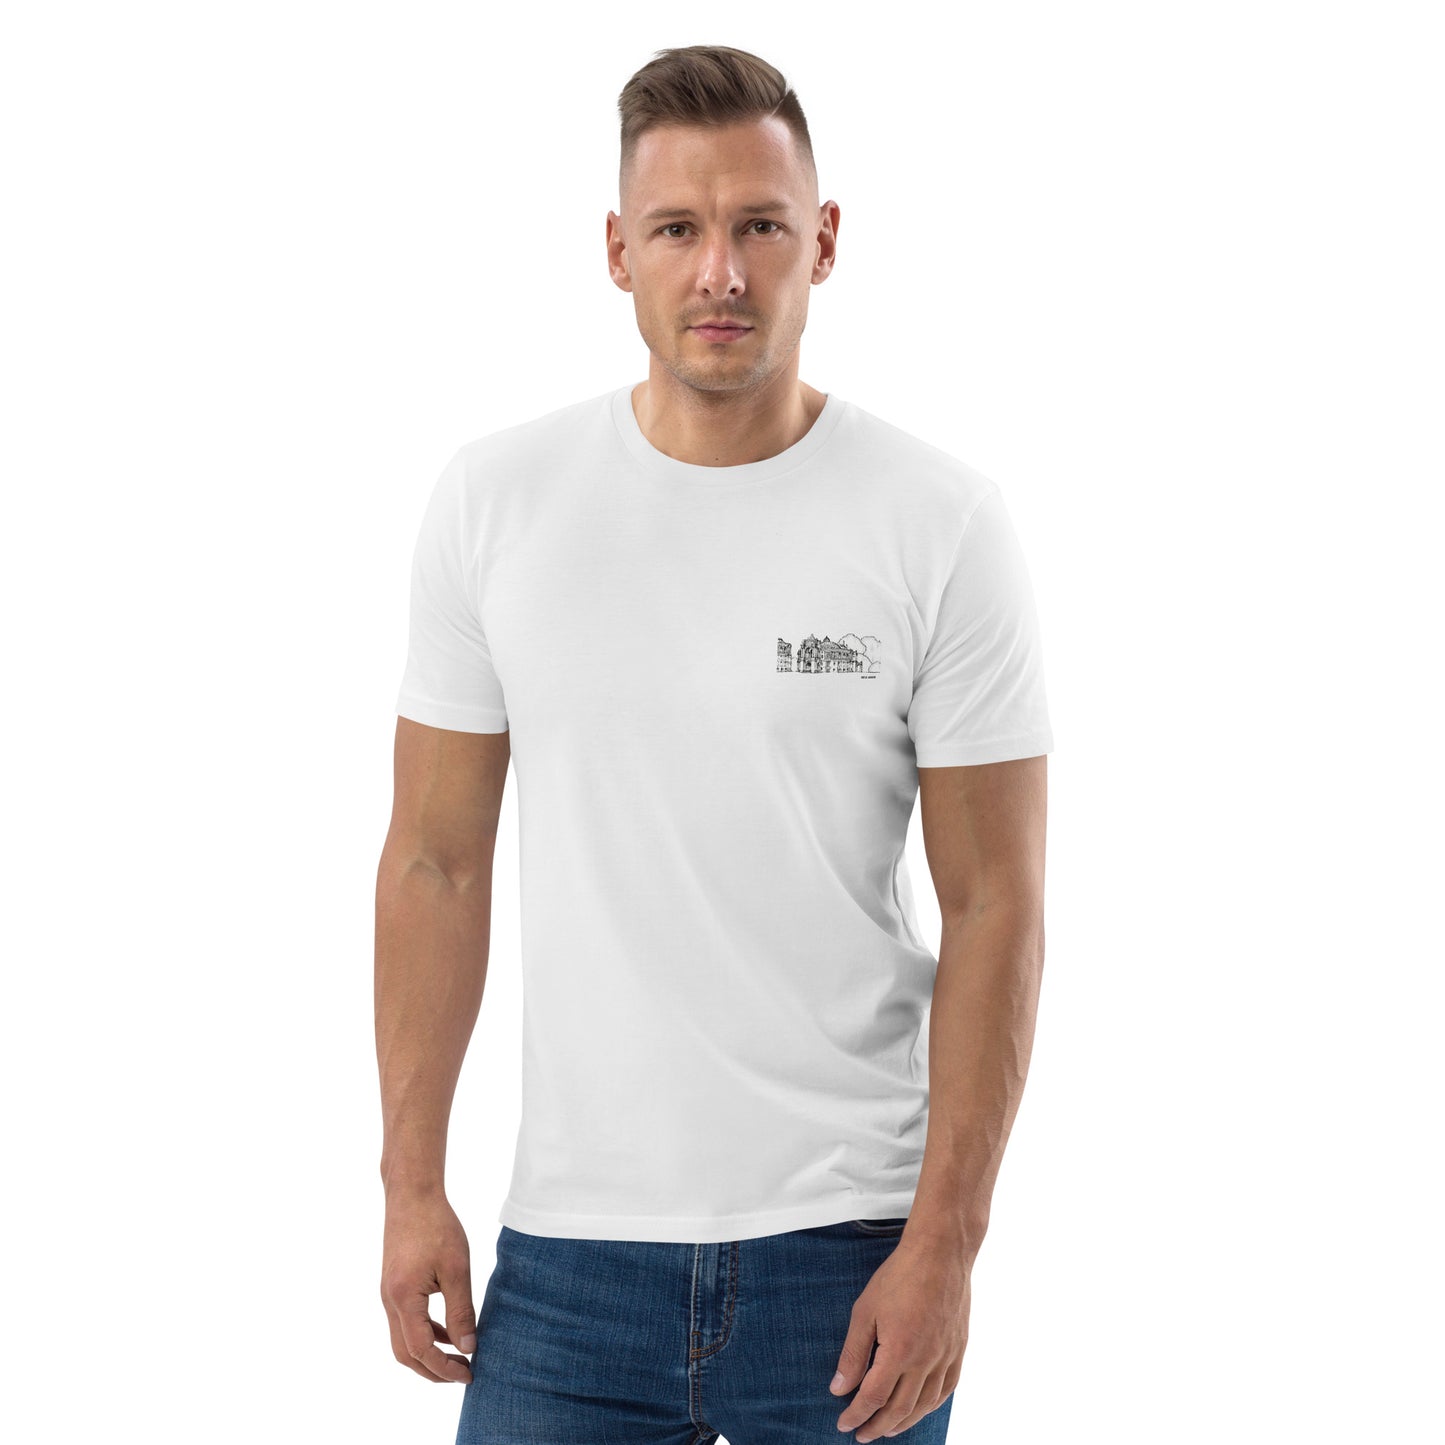 The Odesa T-Shirt Unisex